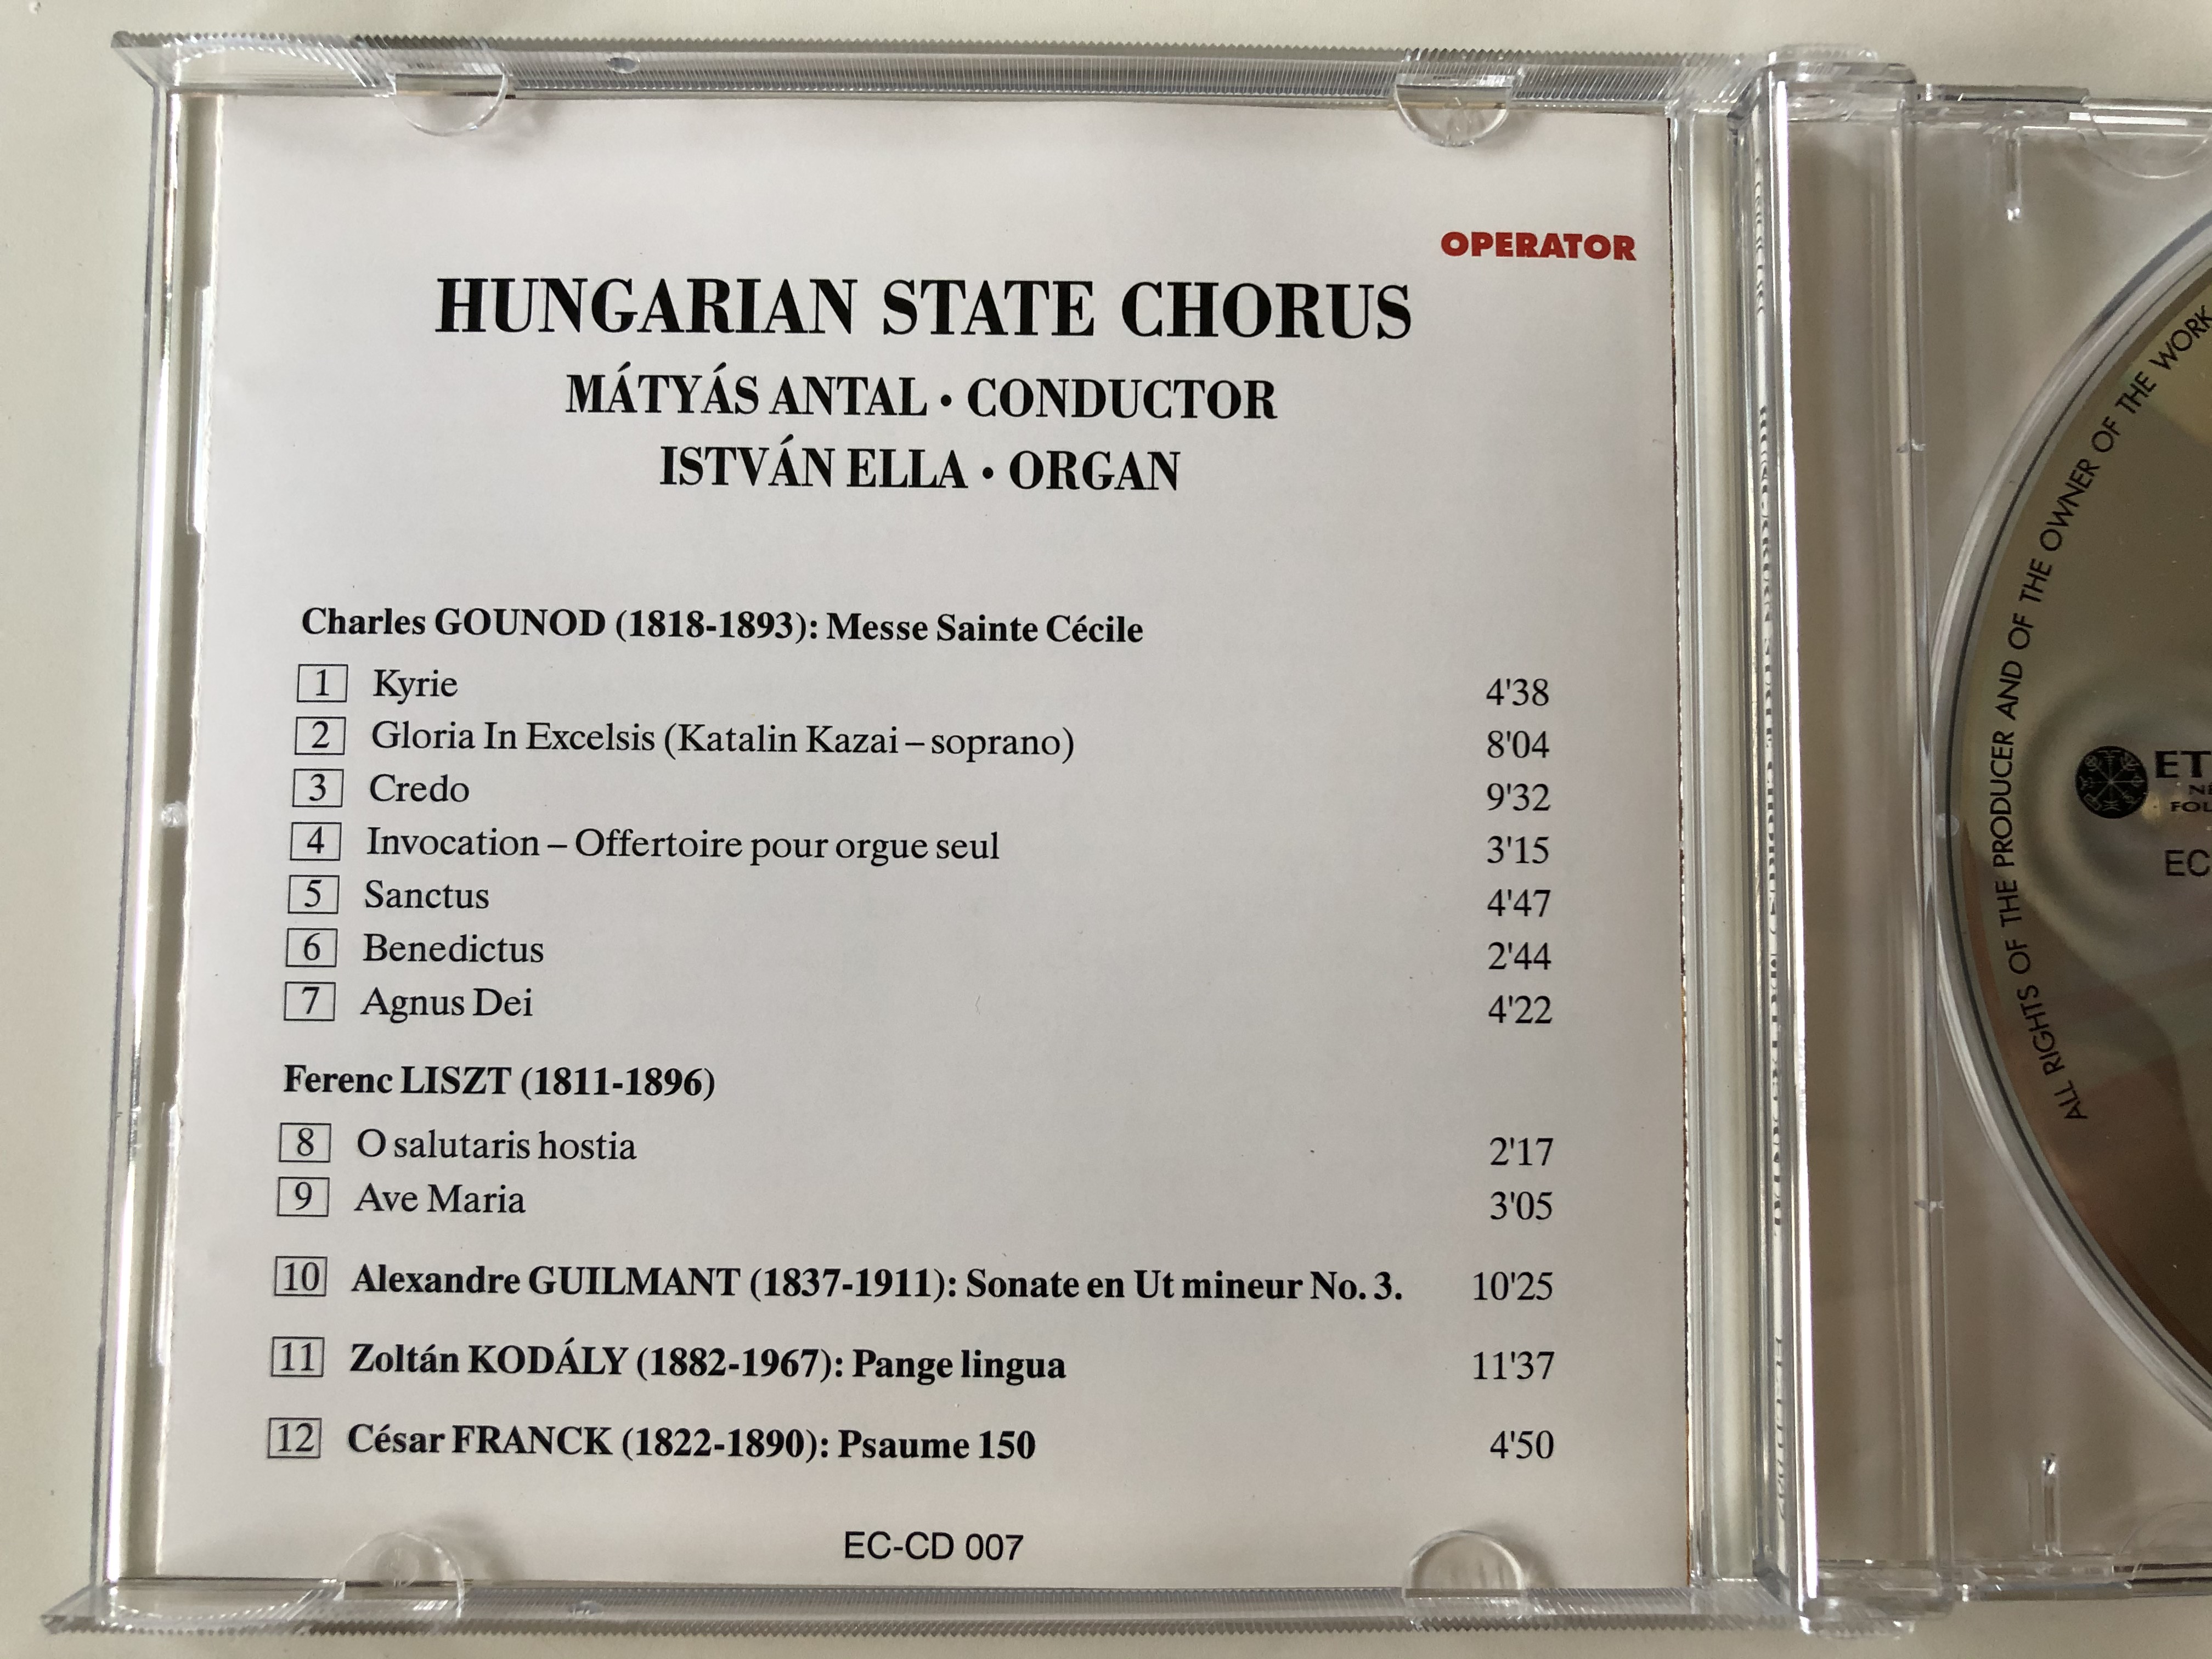 hungarian-state-chorus-istvan-ella-organ-matyas-antal-conductor-gounod-liszt-kodaly-franck-operator-concerto-etnofon-audio-cd-1994-ec-cd-007-5-.jpg